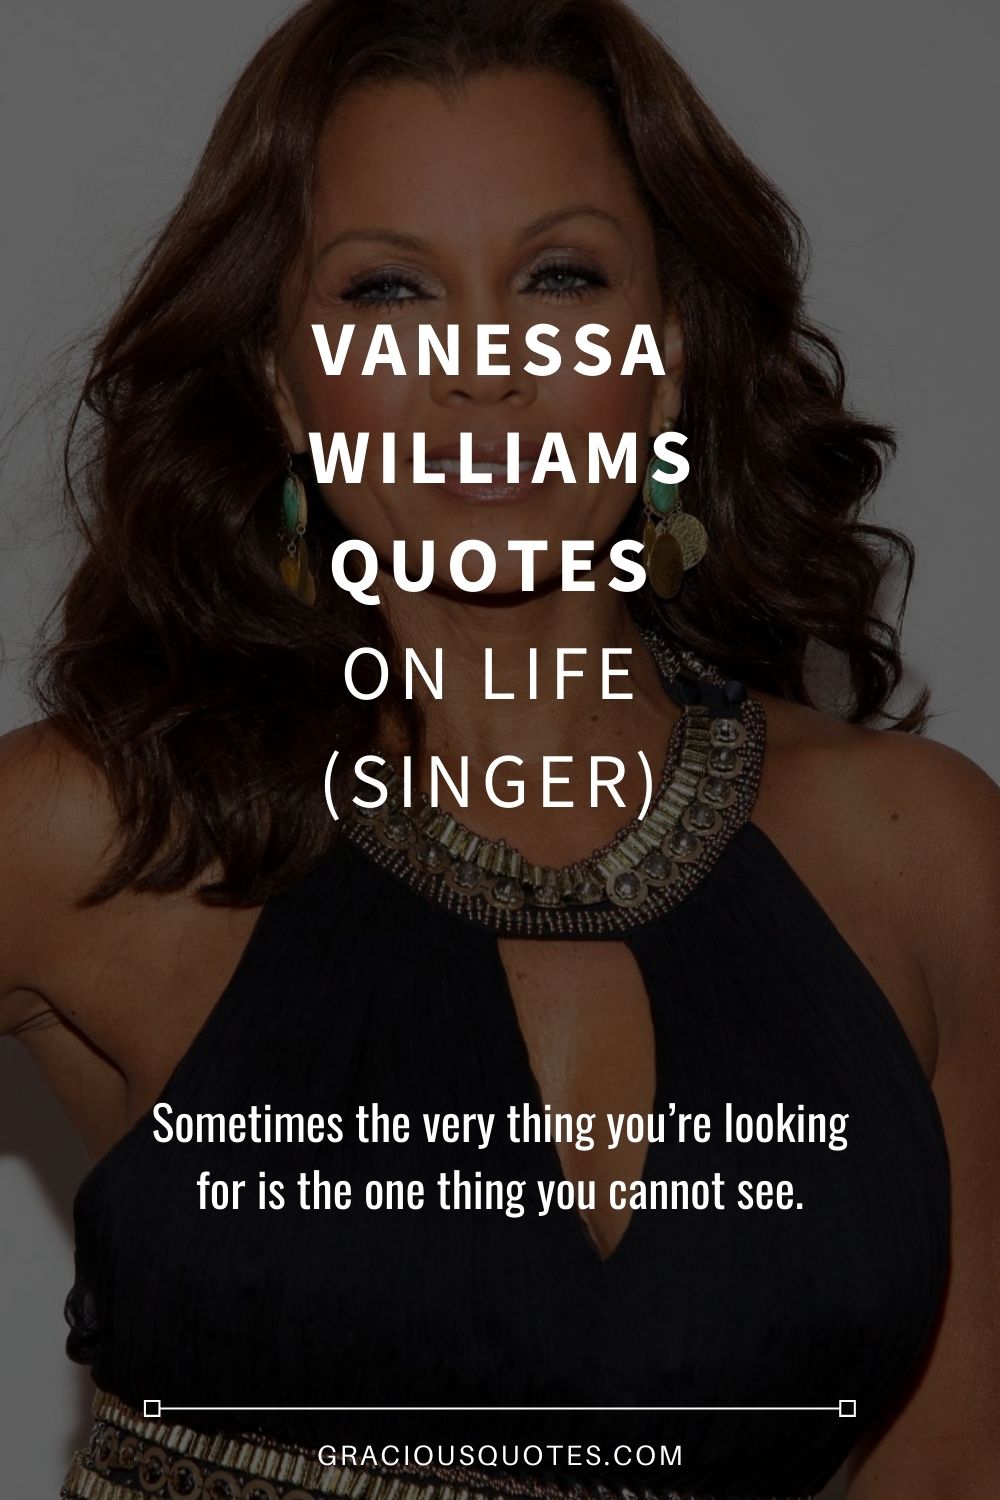 Vanessa Williams Quotes on Life (SINGER) - Gracious Quotes